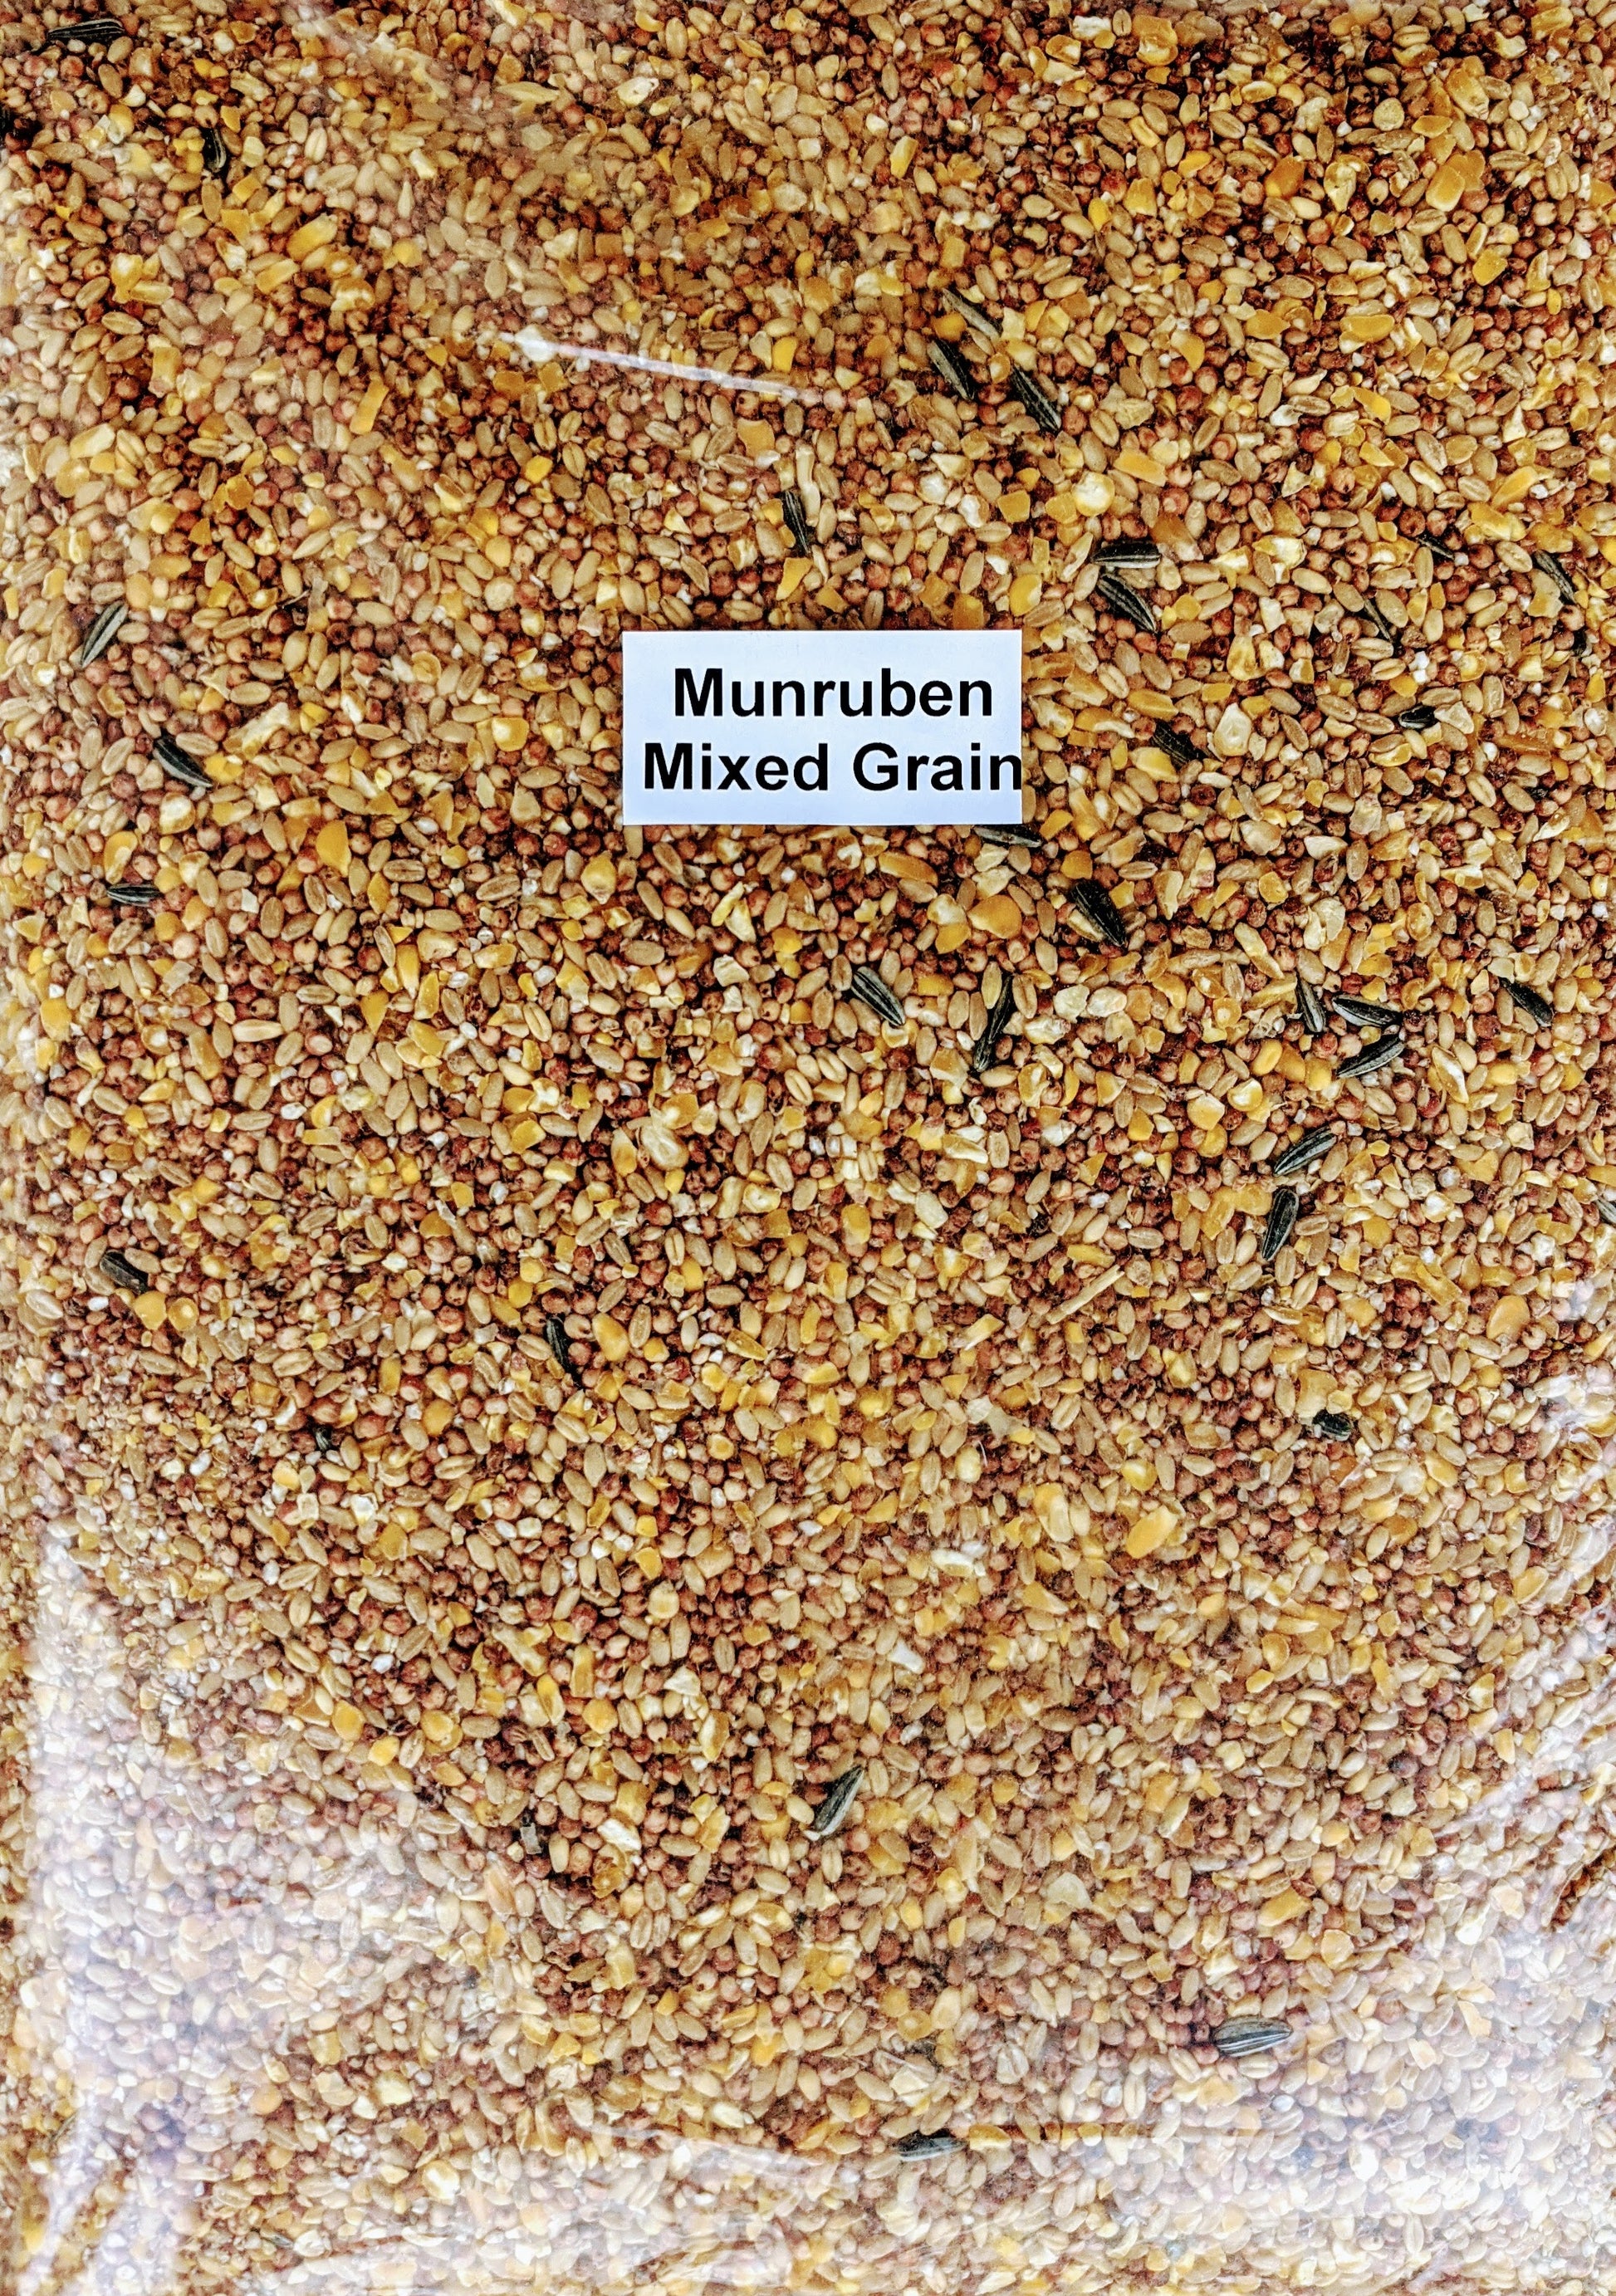 Munruben Mixed Grain 4kg at Buckhams General Produce